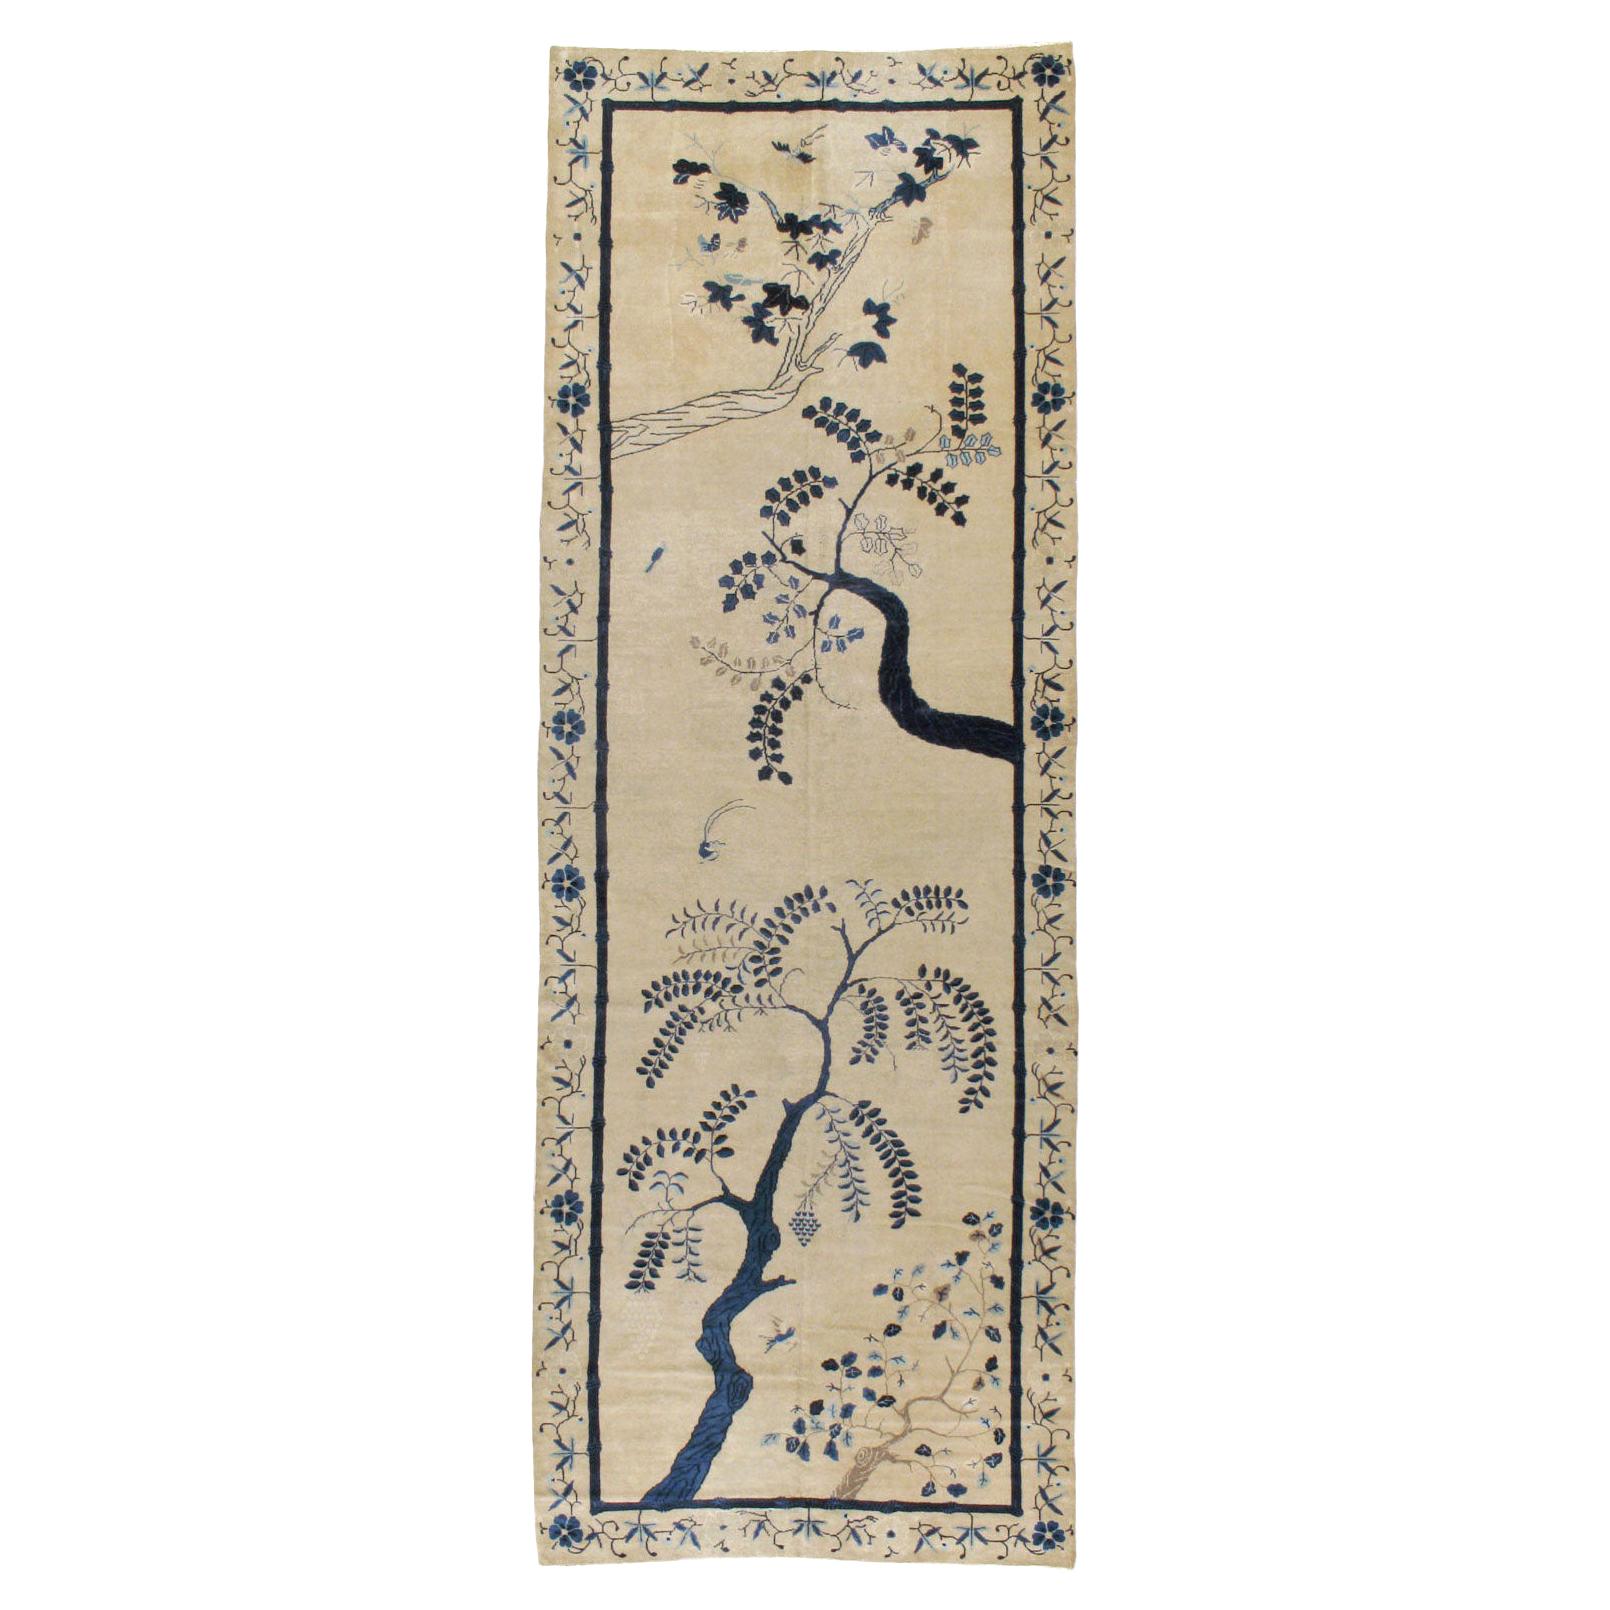 Early 20th Century Handmade Chinese Peking Long Gallery Carpet in Cream & Blue